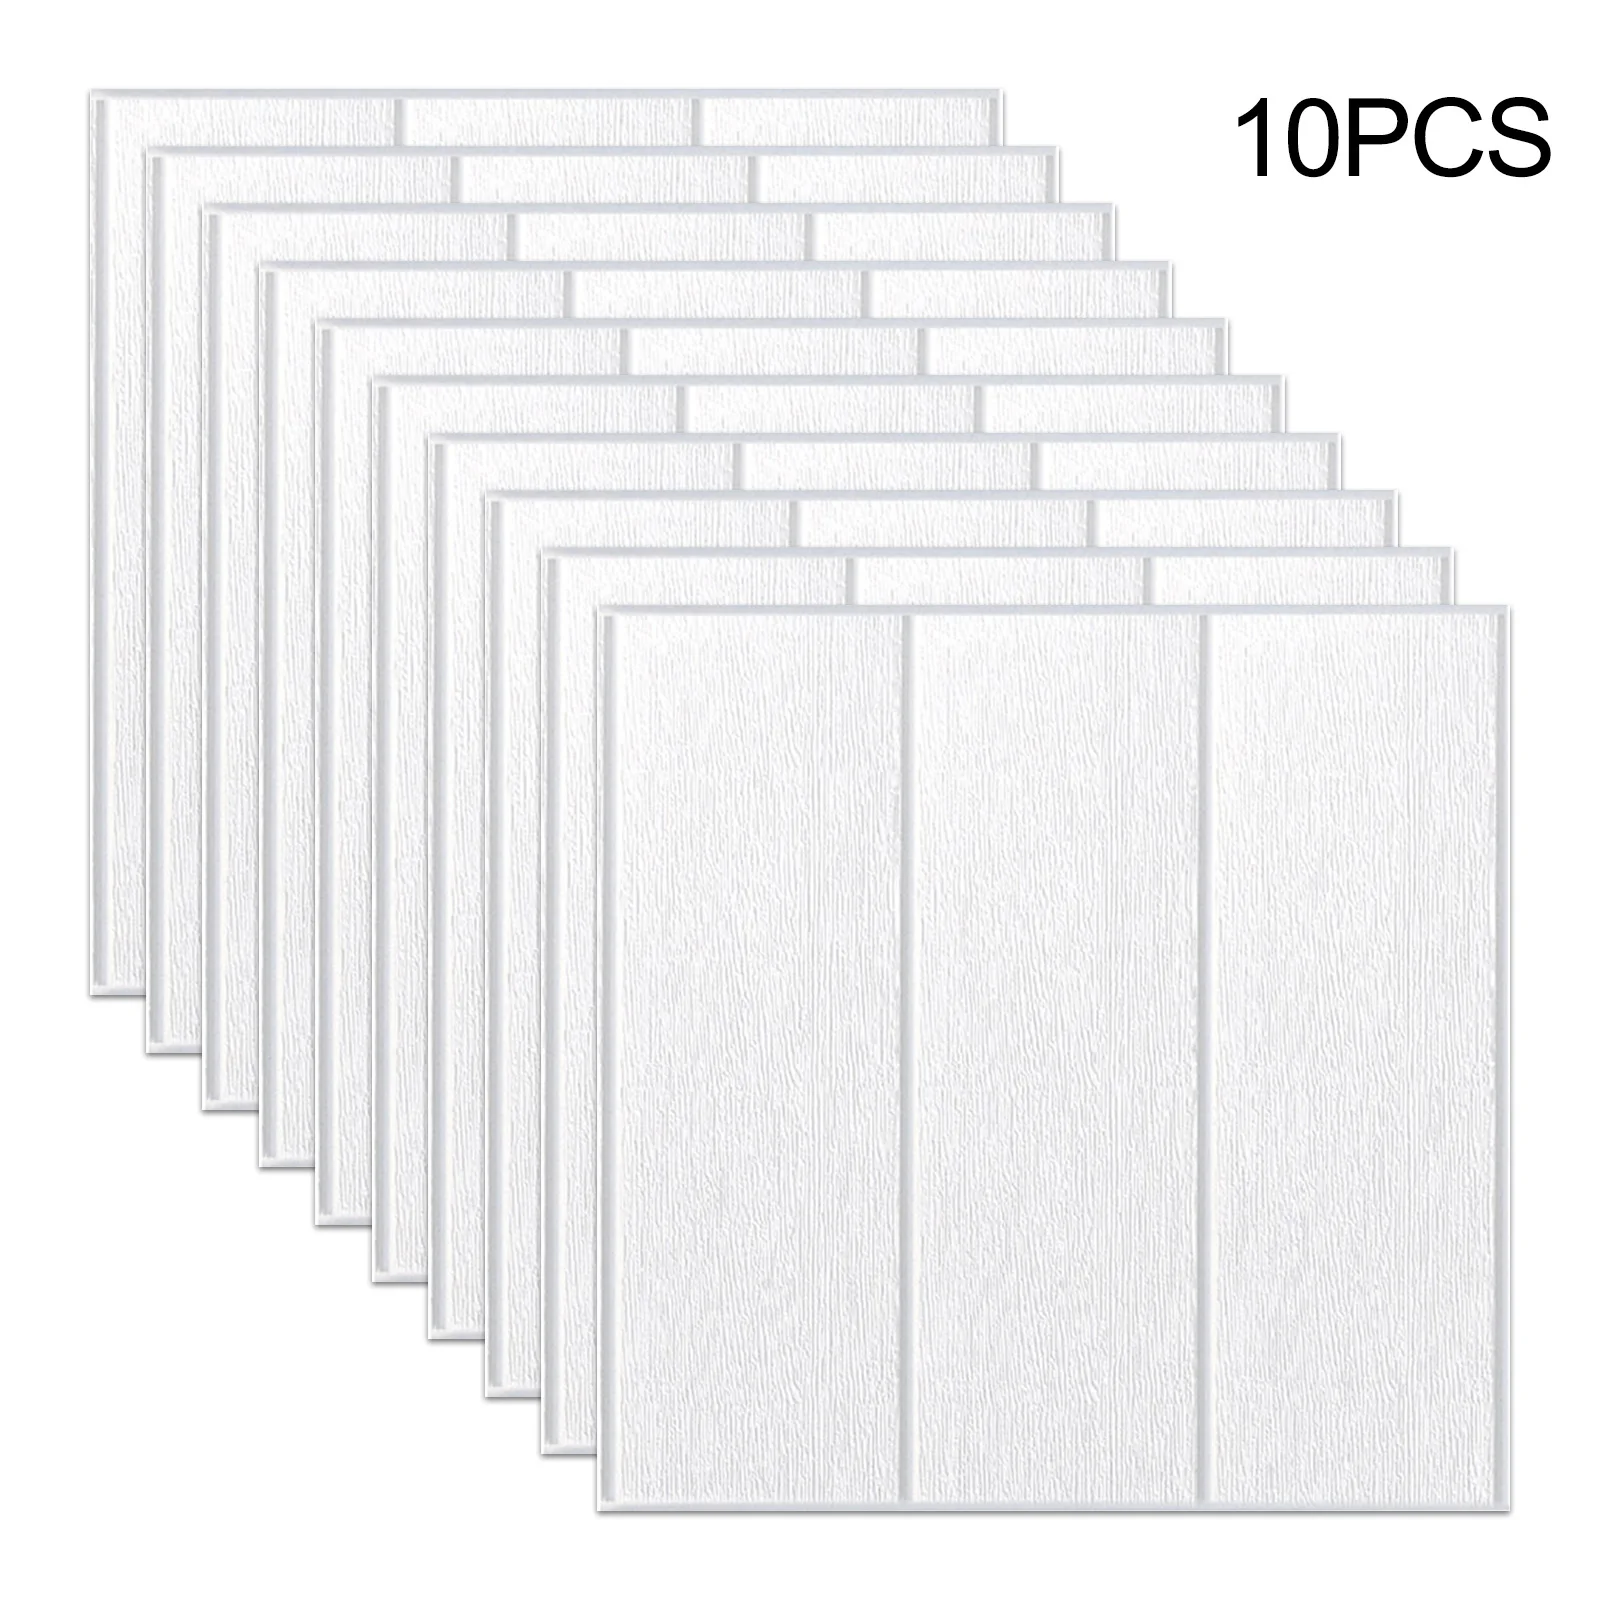 

10pcs 3D Wall Sticker Waterproof Self Adhesive Wallpapers Foam Panels For Living Room Bedroom Home Decor 3D Brick Wall Sticker